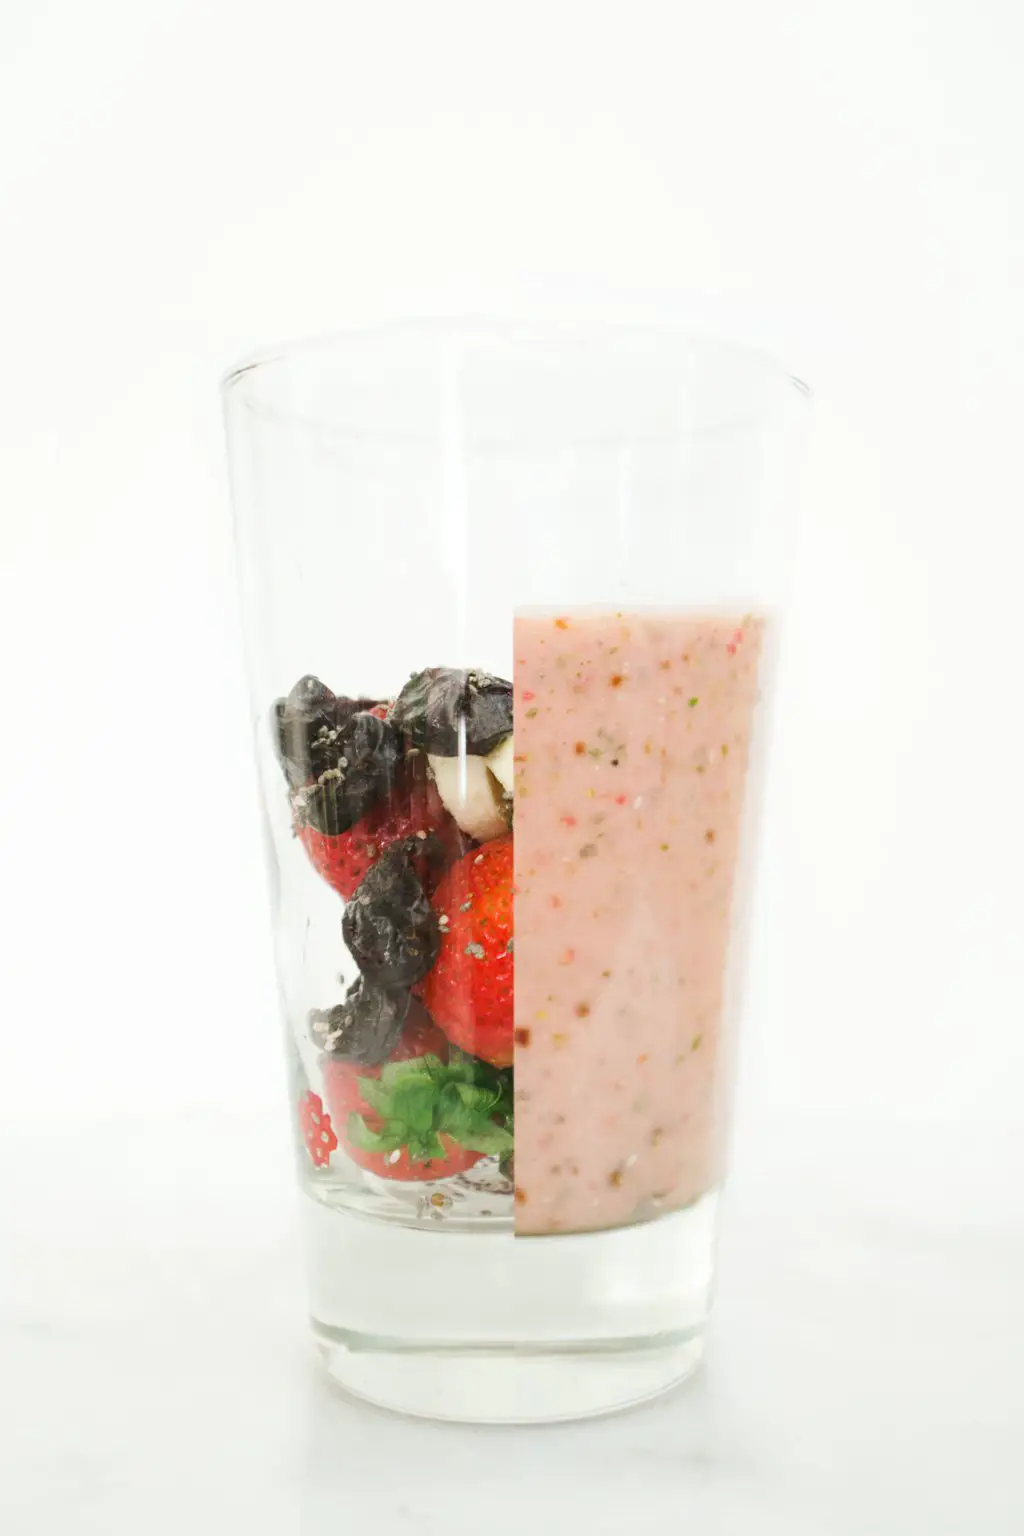 Pink smoothie recipe with strawberry, banana, cherry, chia seeds and Truvia nectar via @thouswellblog